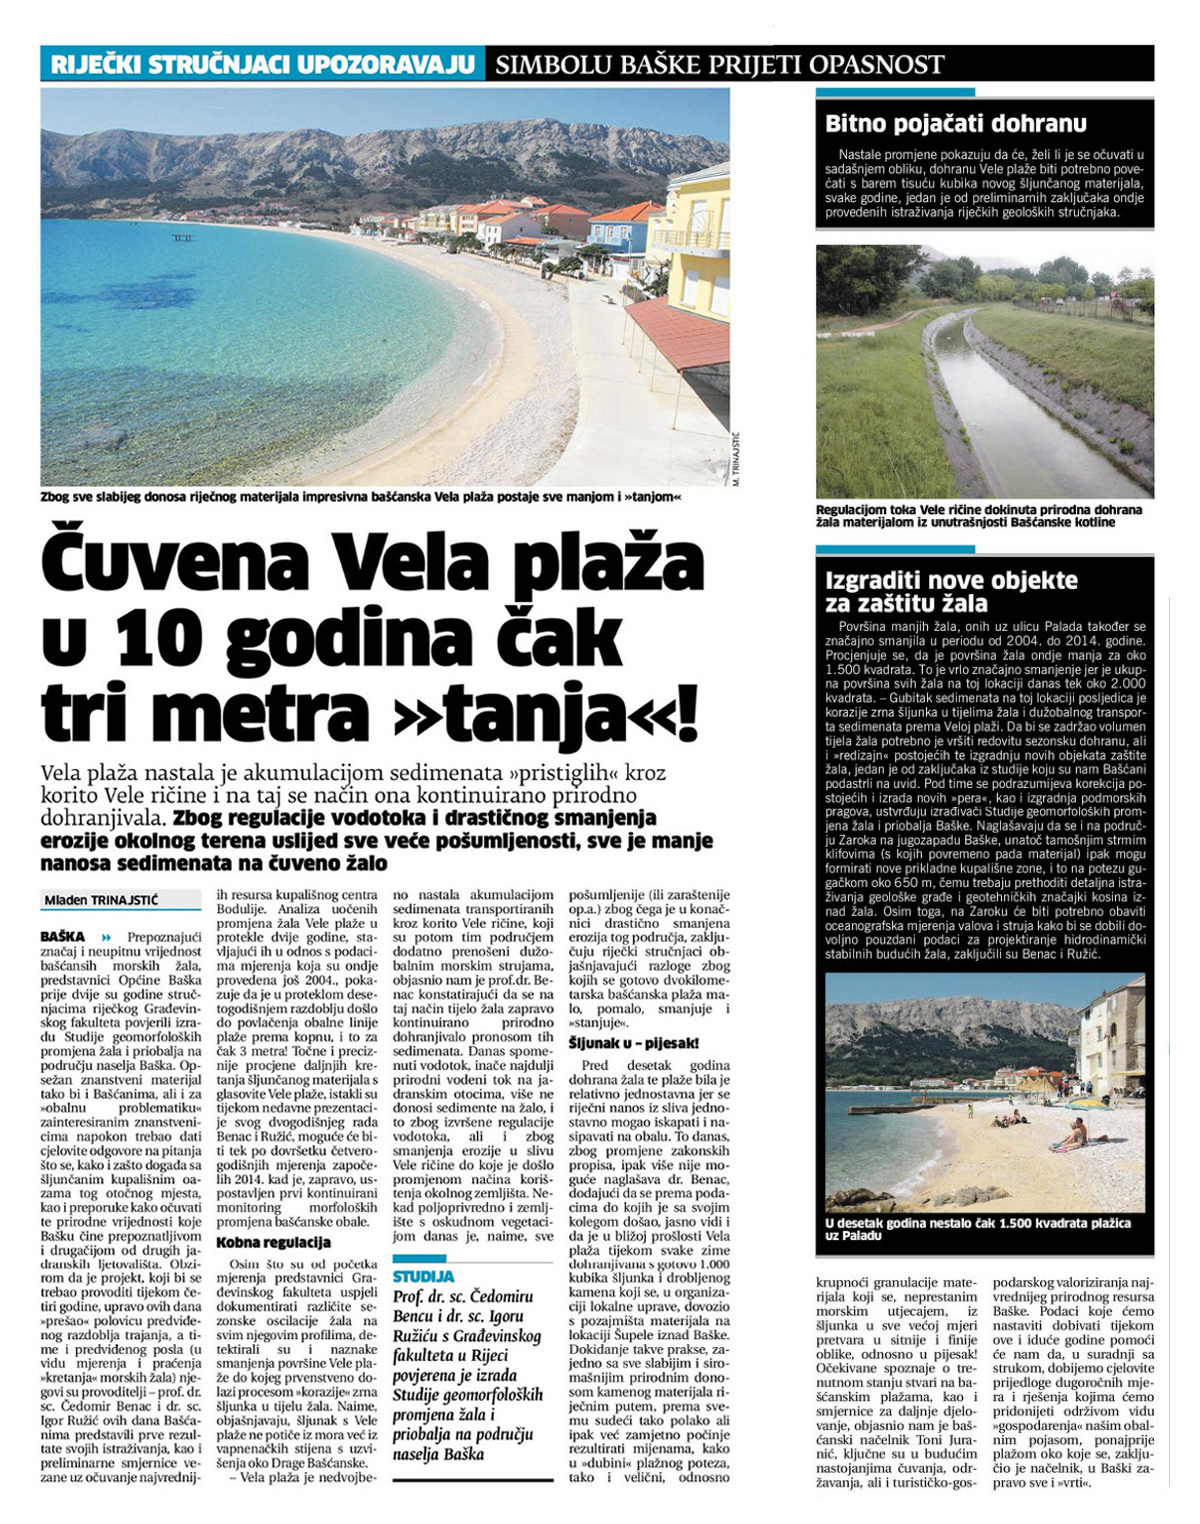 Čuvena Vela plaža u 10 godina čak 3 metra tanja